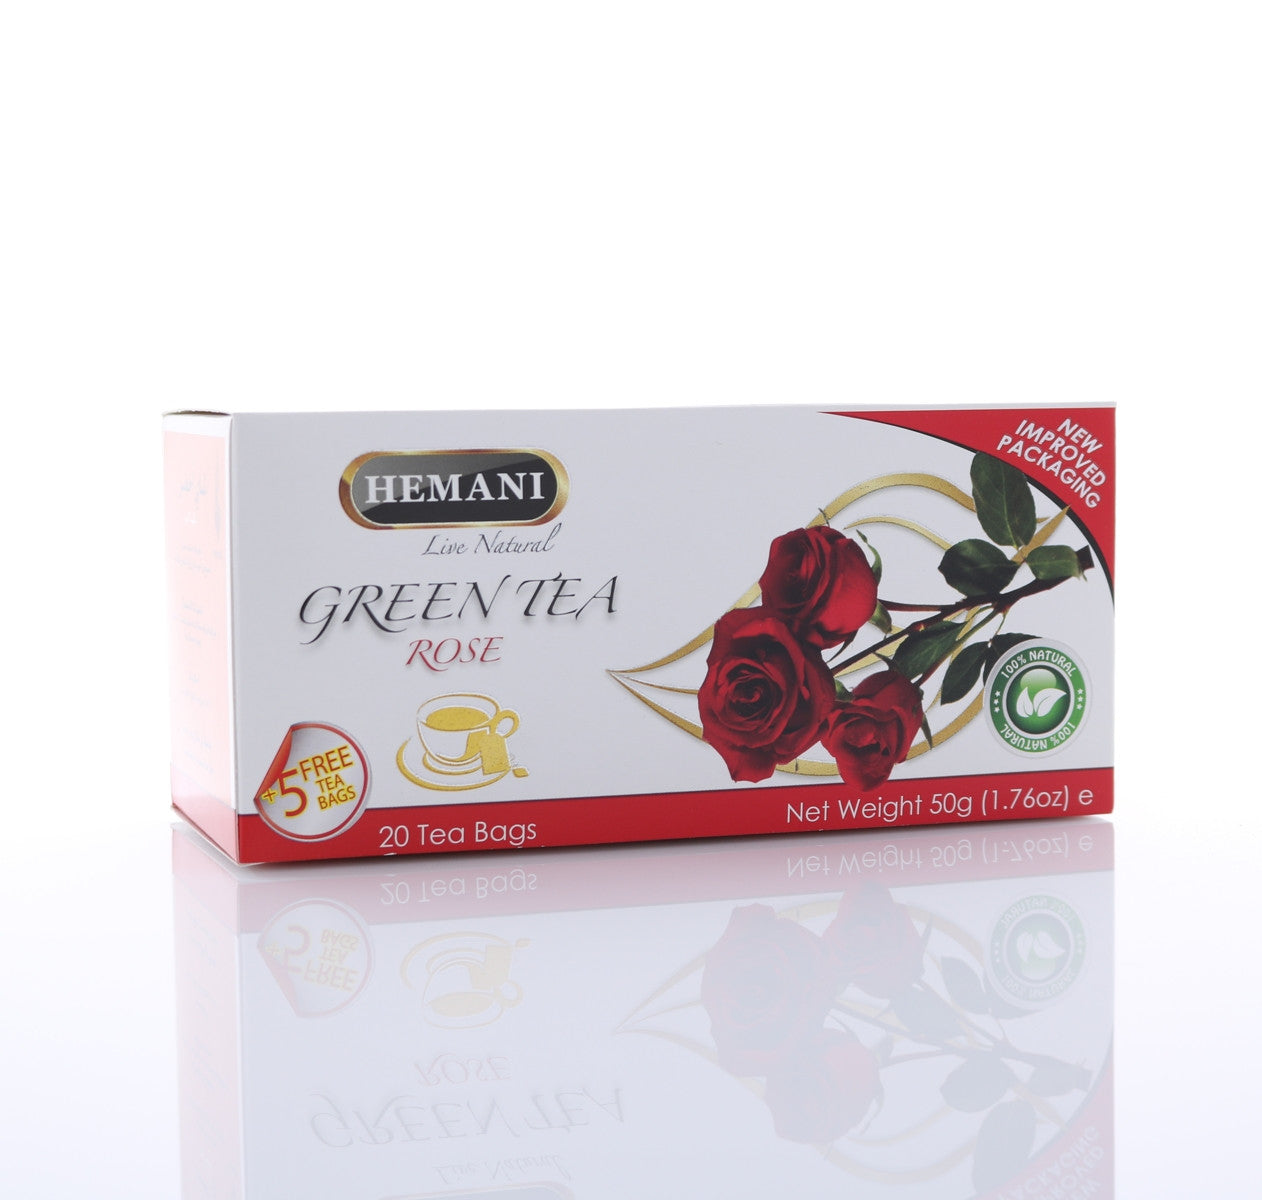 HEMANI Green Tea Rose 40g